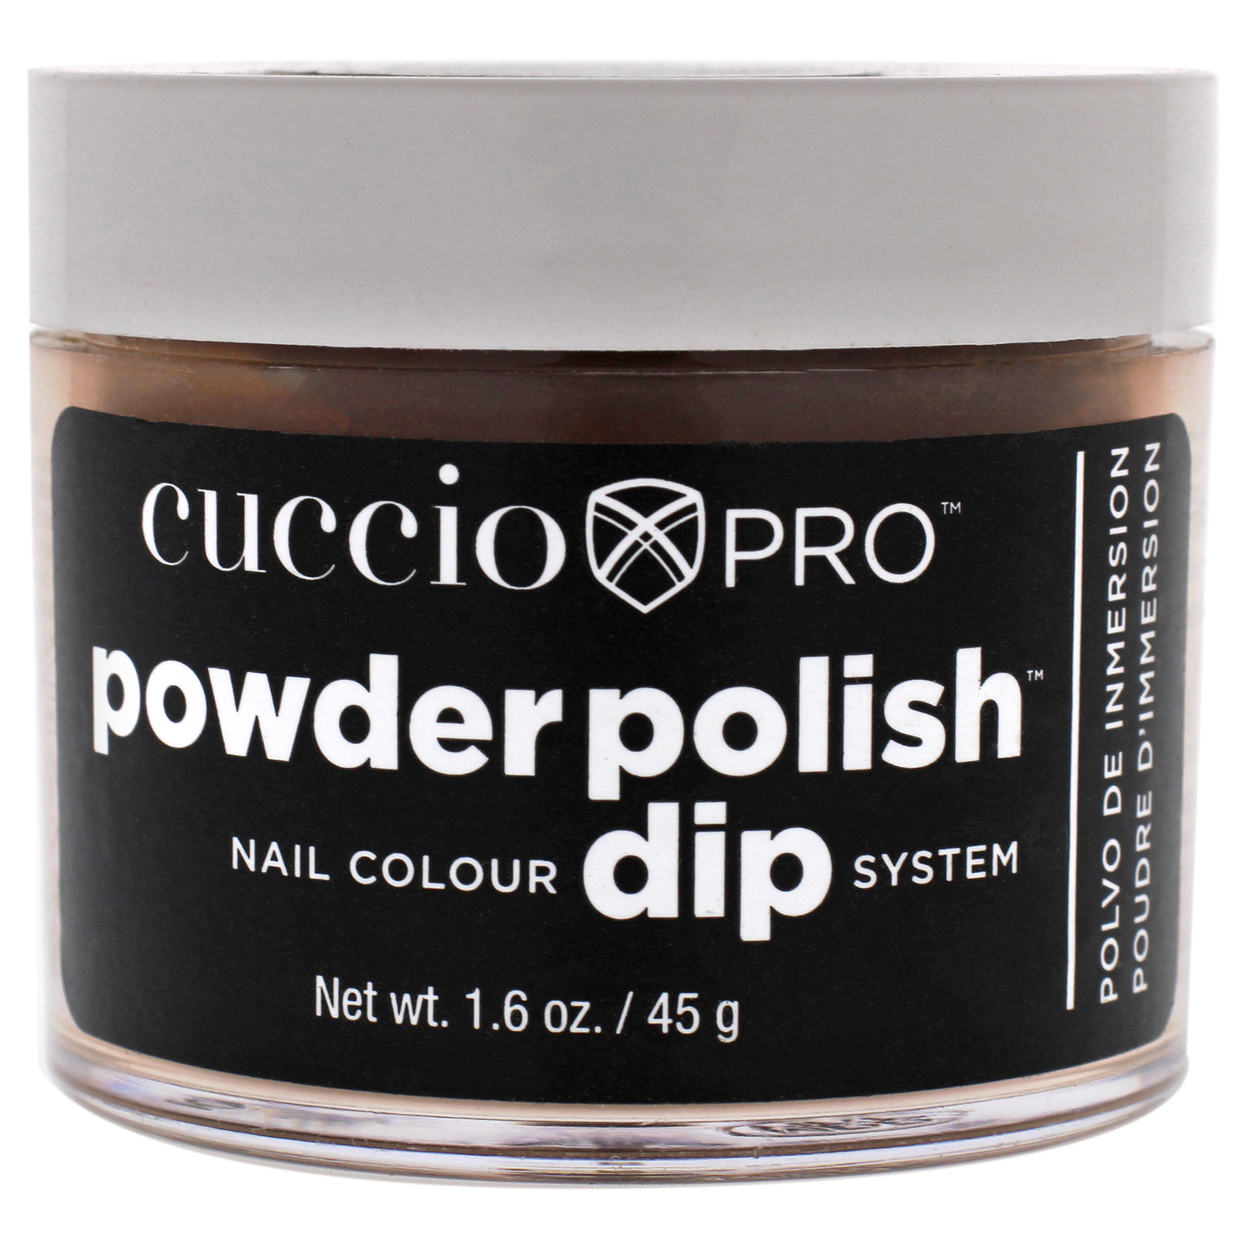 Cuccio Colour Pro Powder Polish Nail Colour Dip System - Caramel Kisses Nail Powder 1.6 Oz